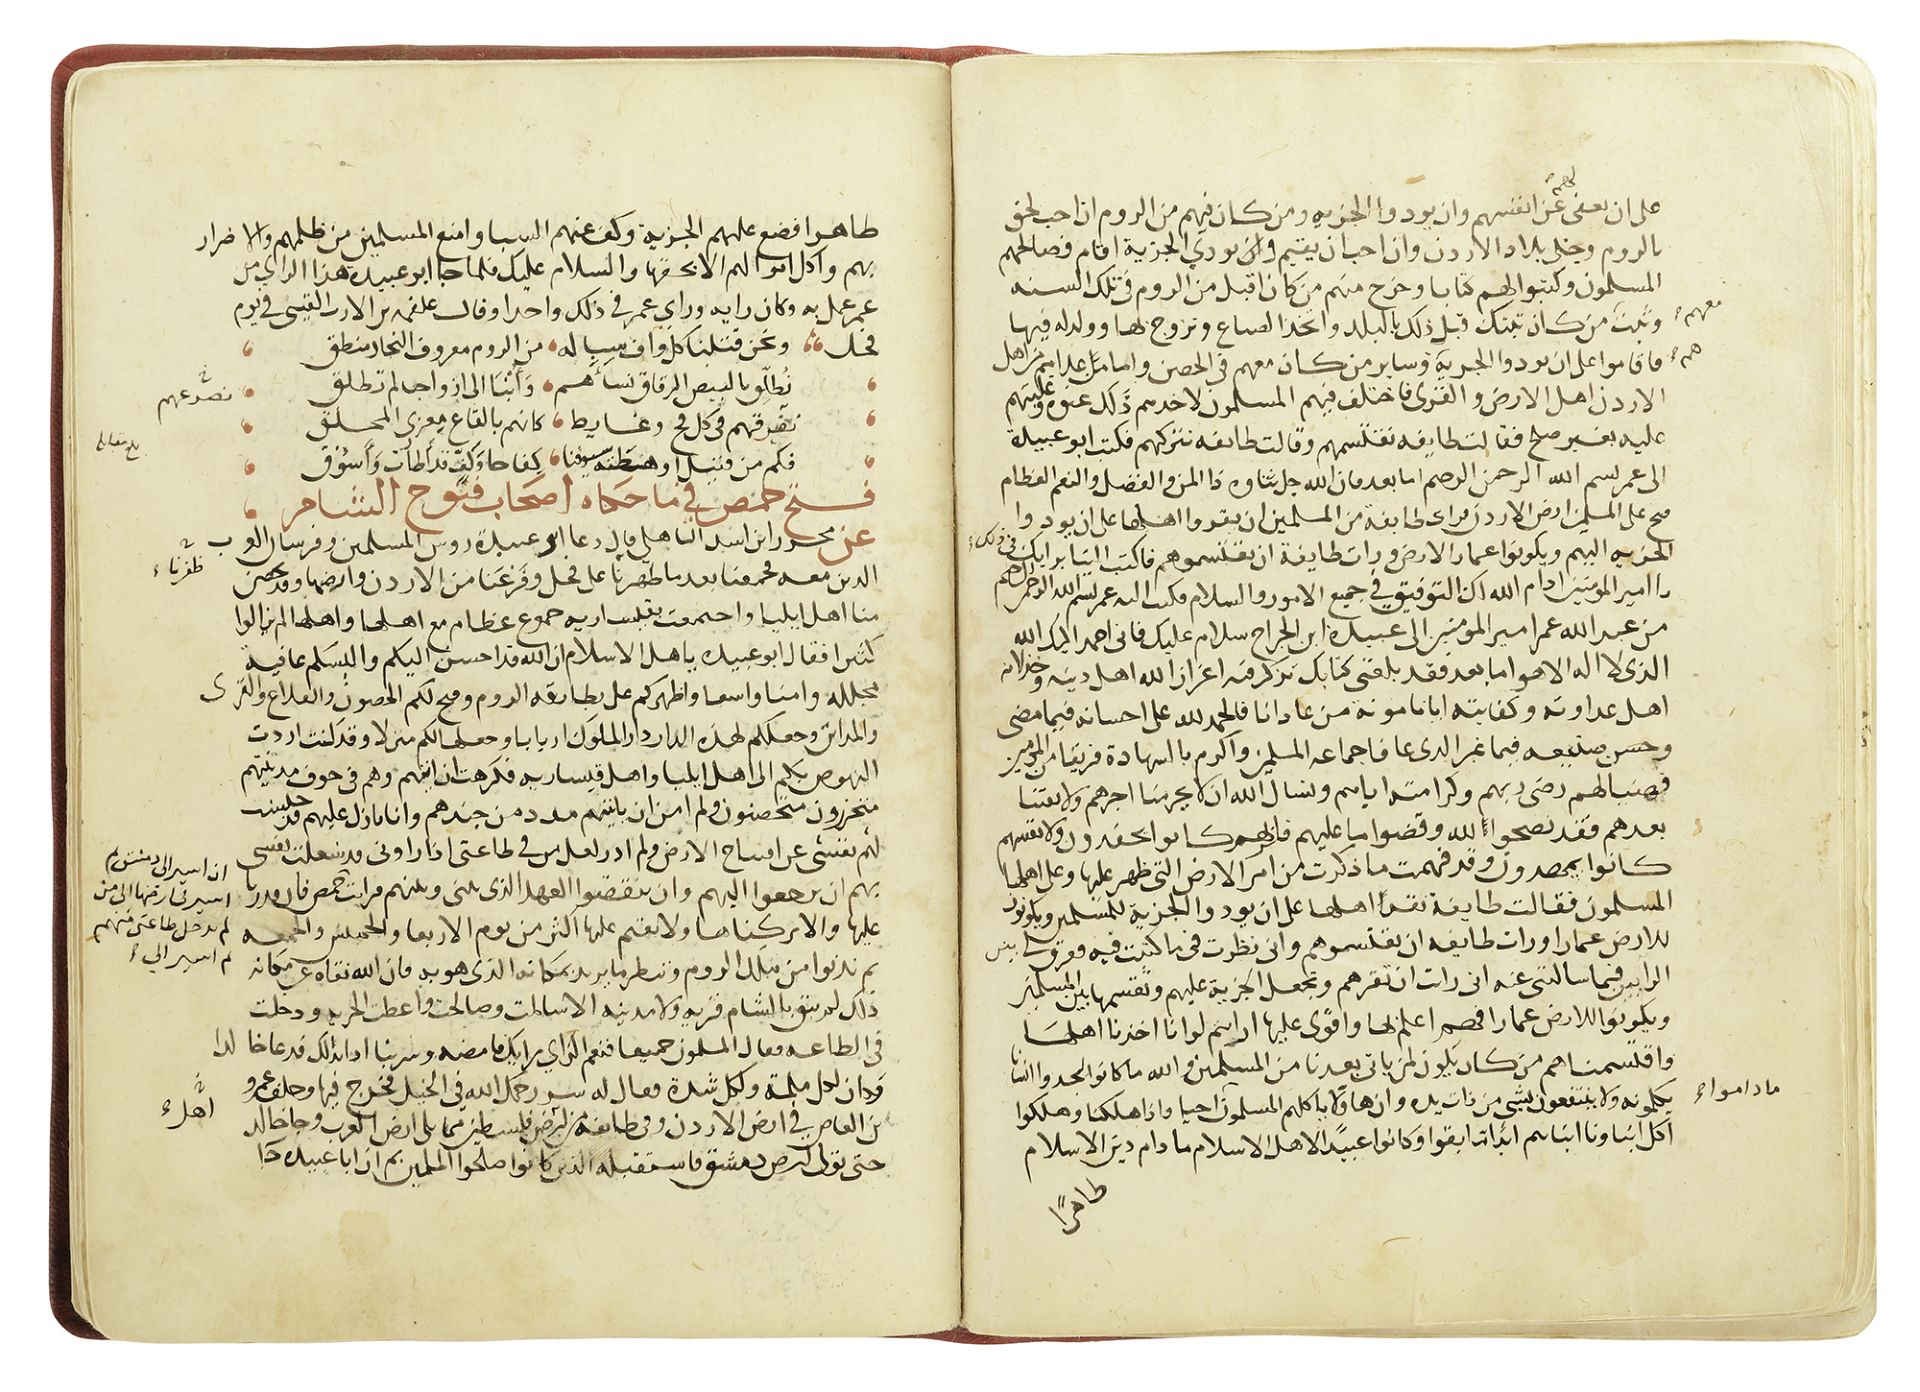 IKTIFA FI MAGHAZI AL-MUSTAFA WAL KHULAFA AL-THALATHA, LATE 14TH-EARLY 15TH CENTURY, BY ABU RABI SULA